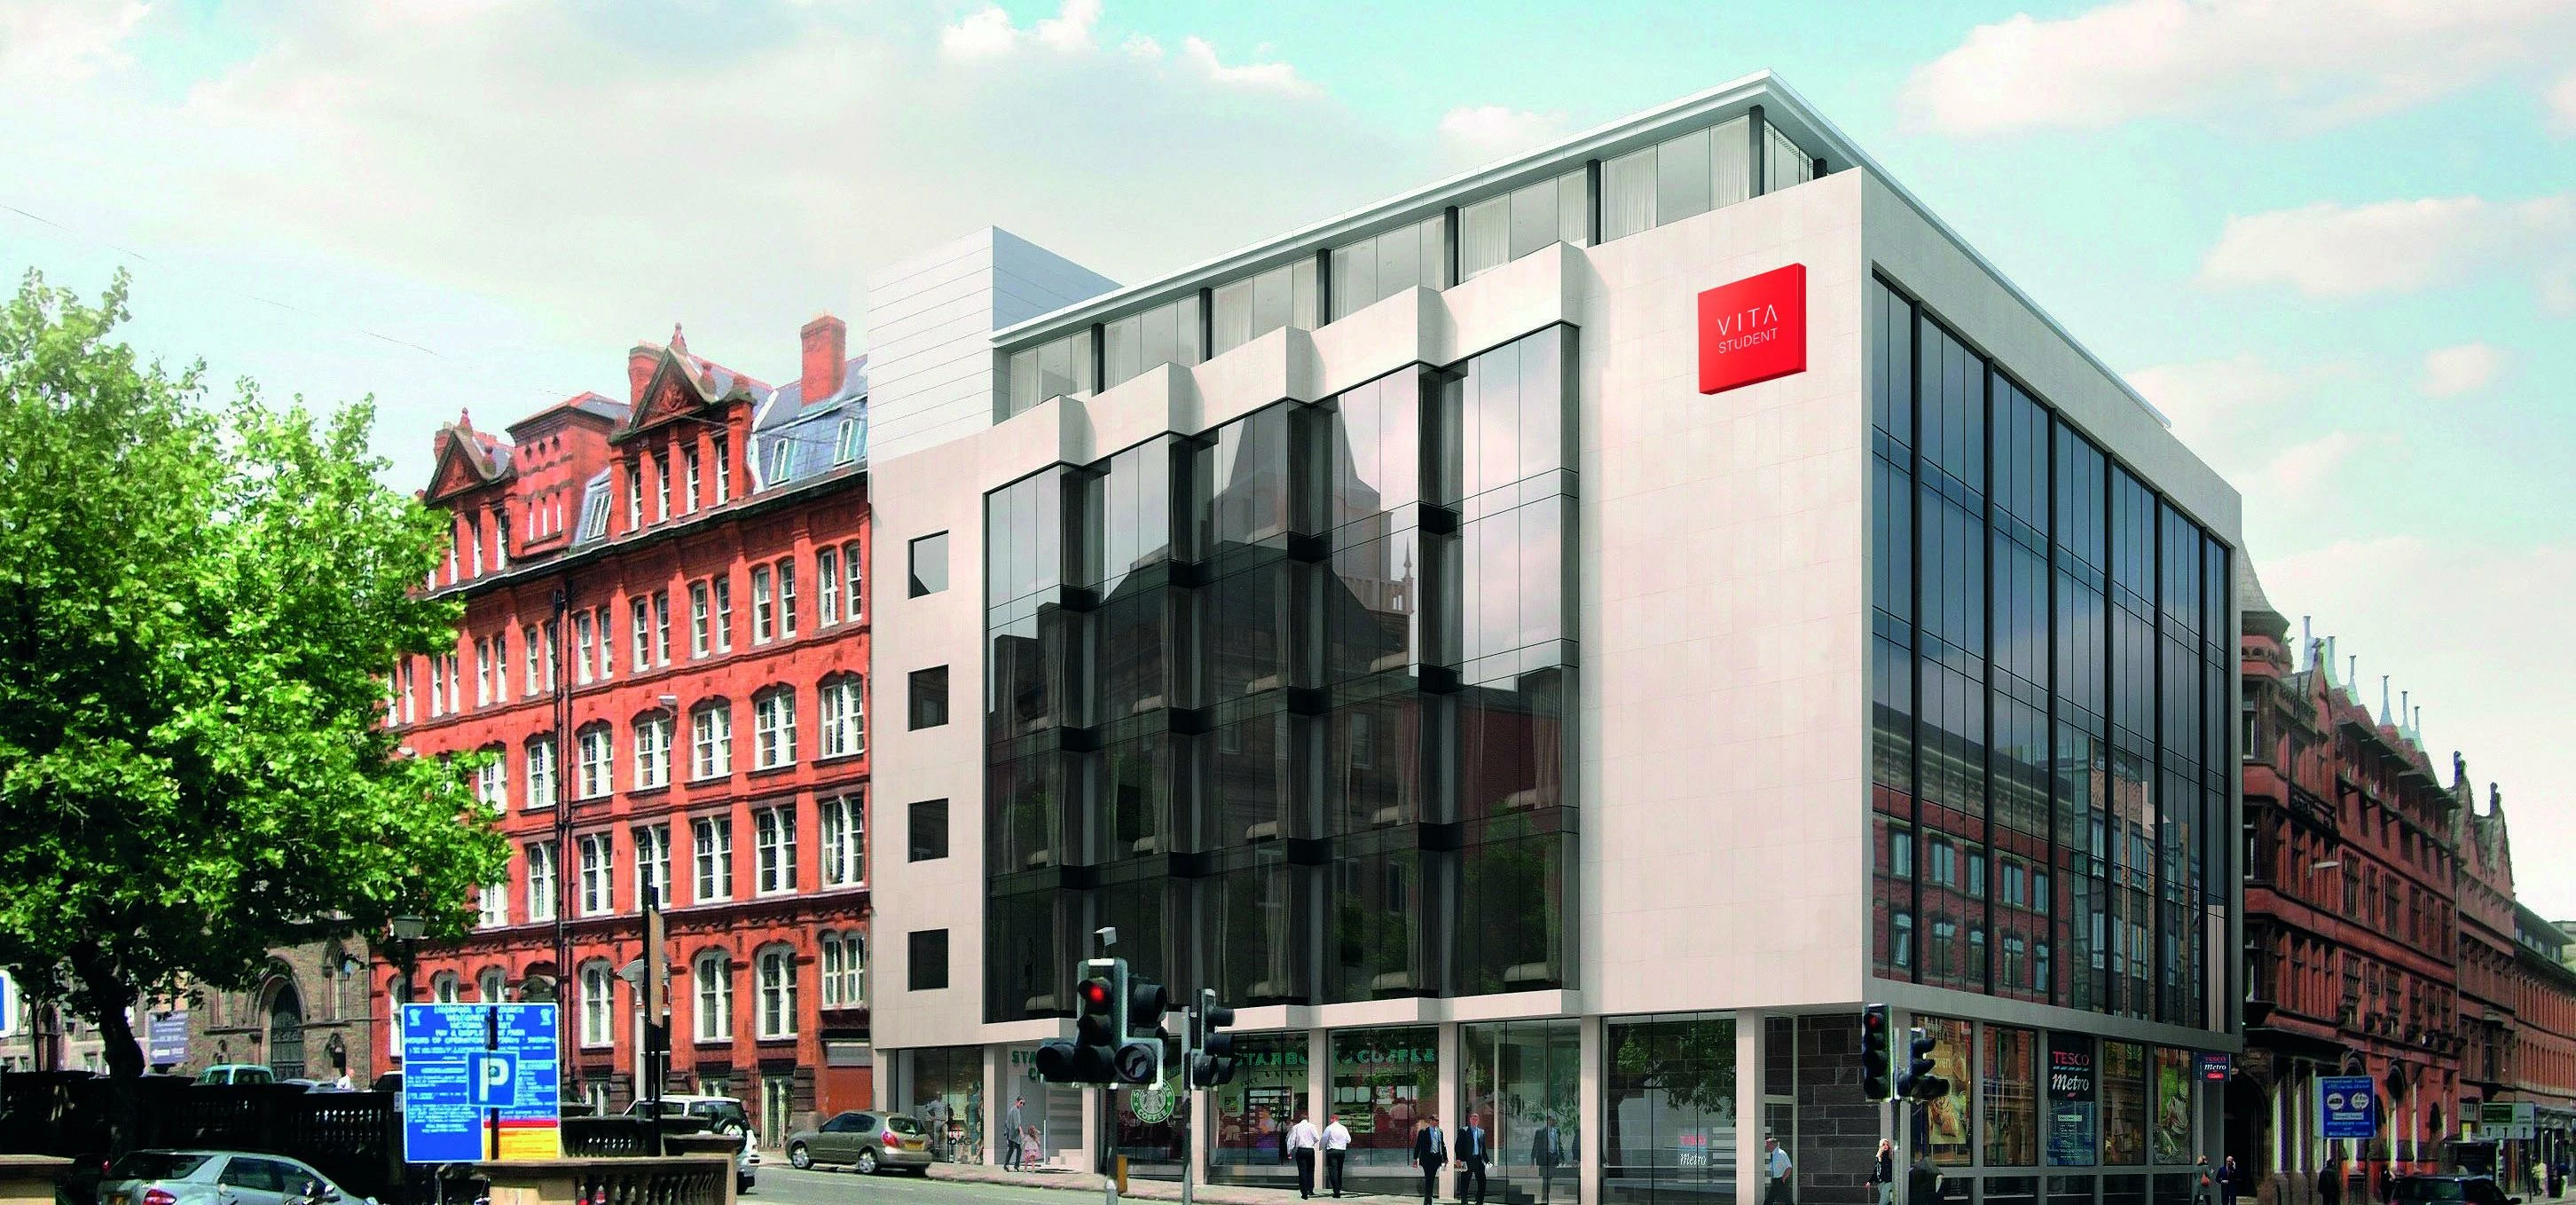 The development on Crosshall Street, Liverpool